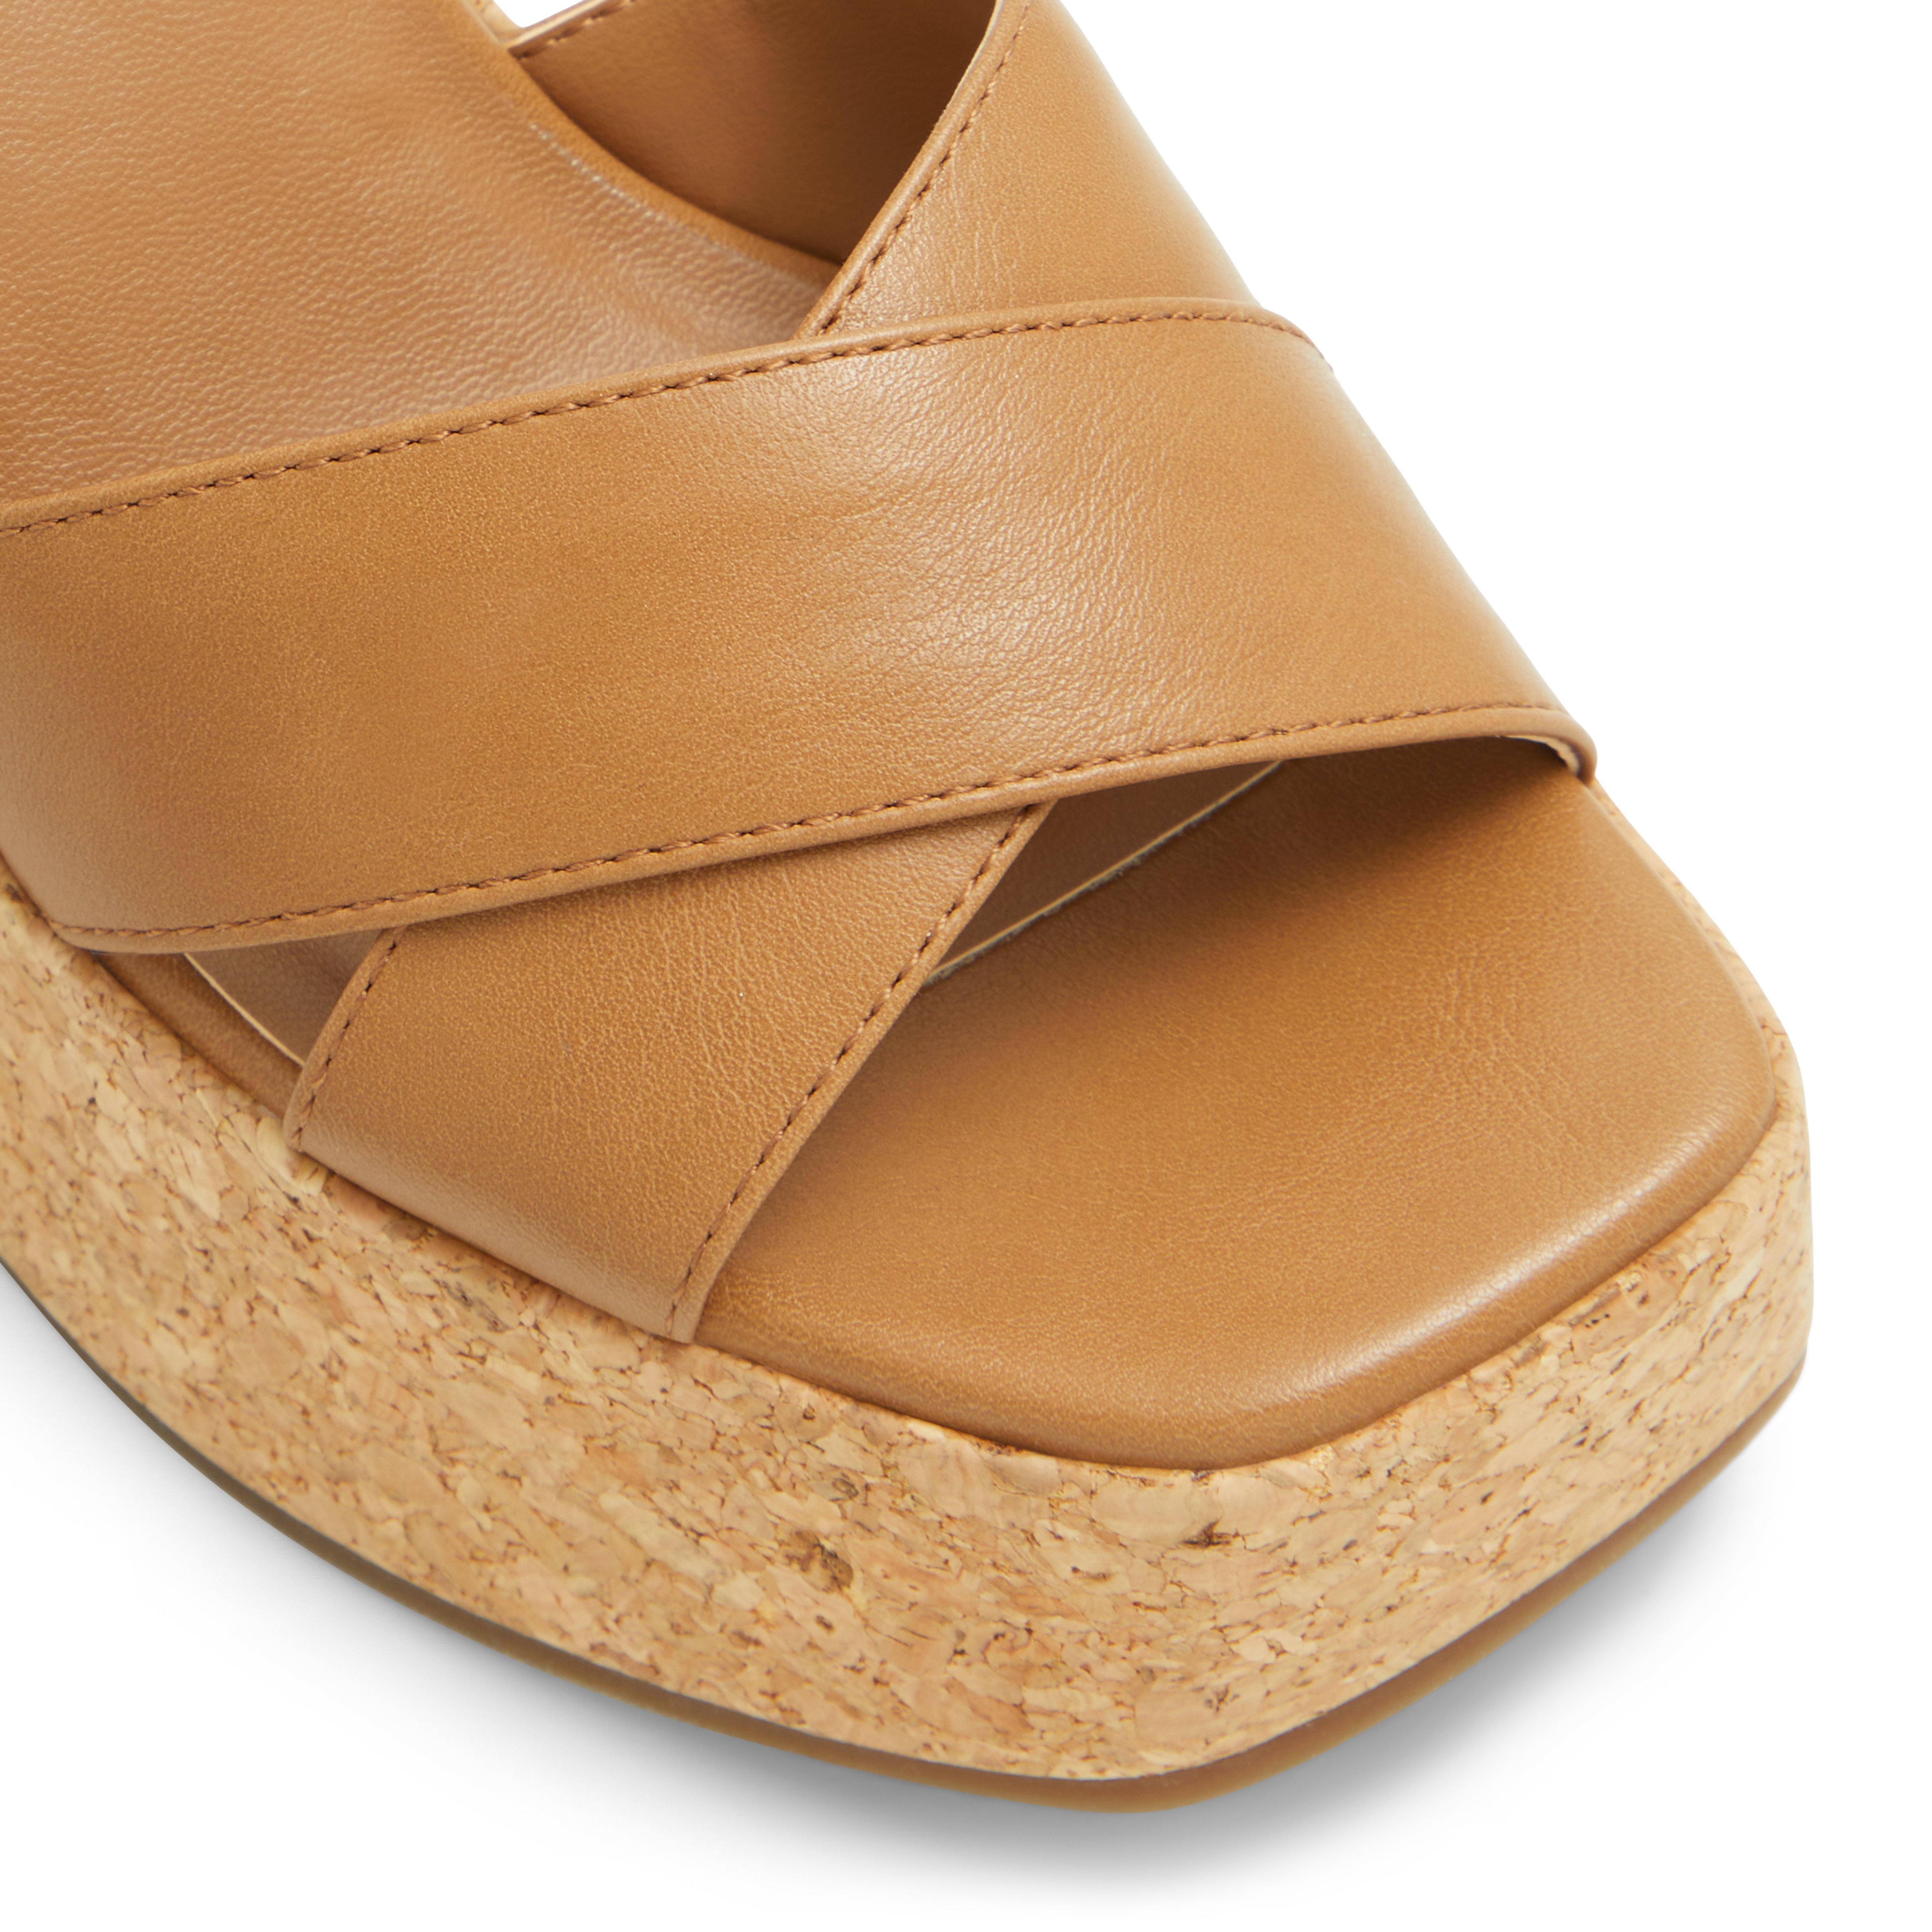 Alanii High heel chunky platform sandals